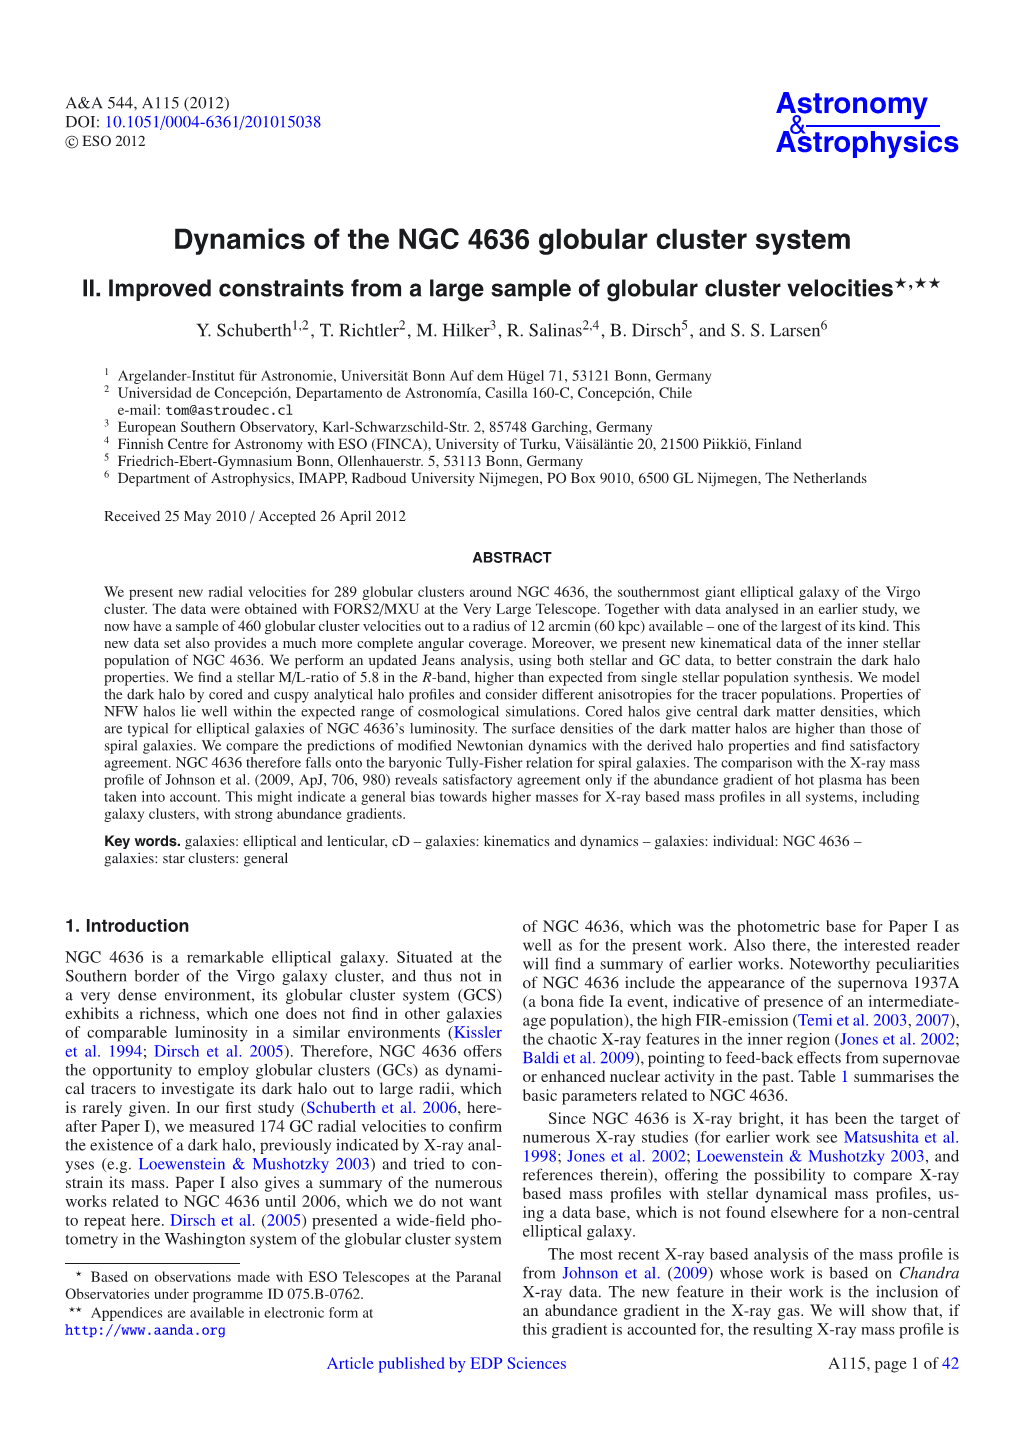 Dynamics of the NGC 4636 Globular Cluster System II